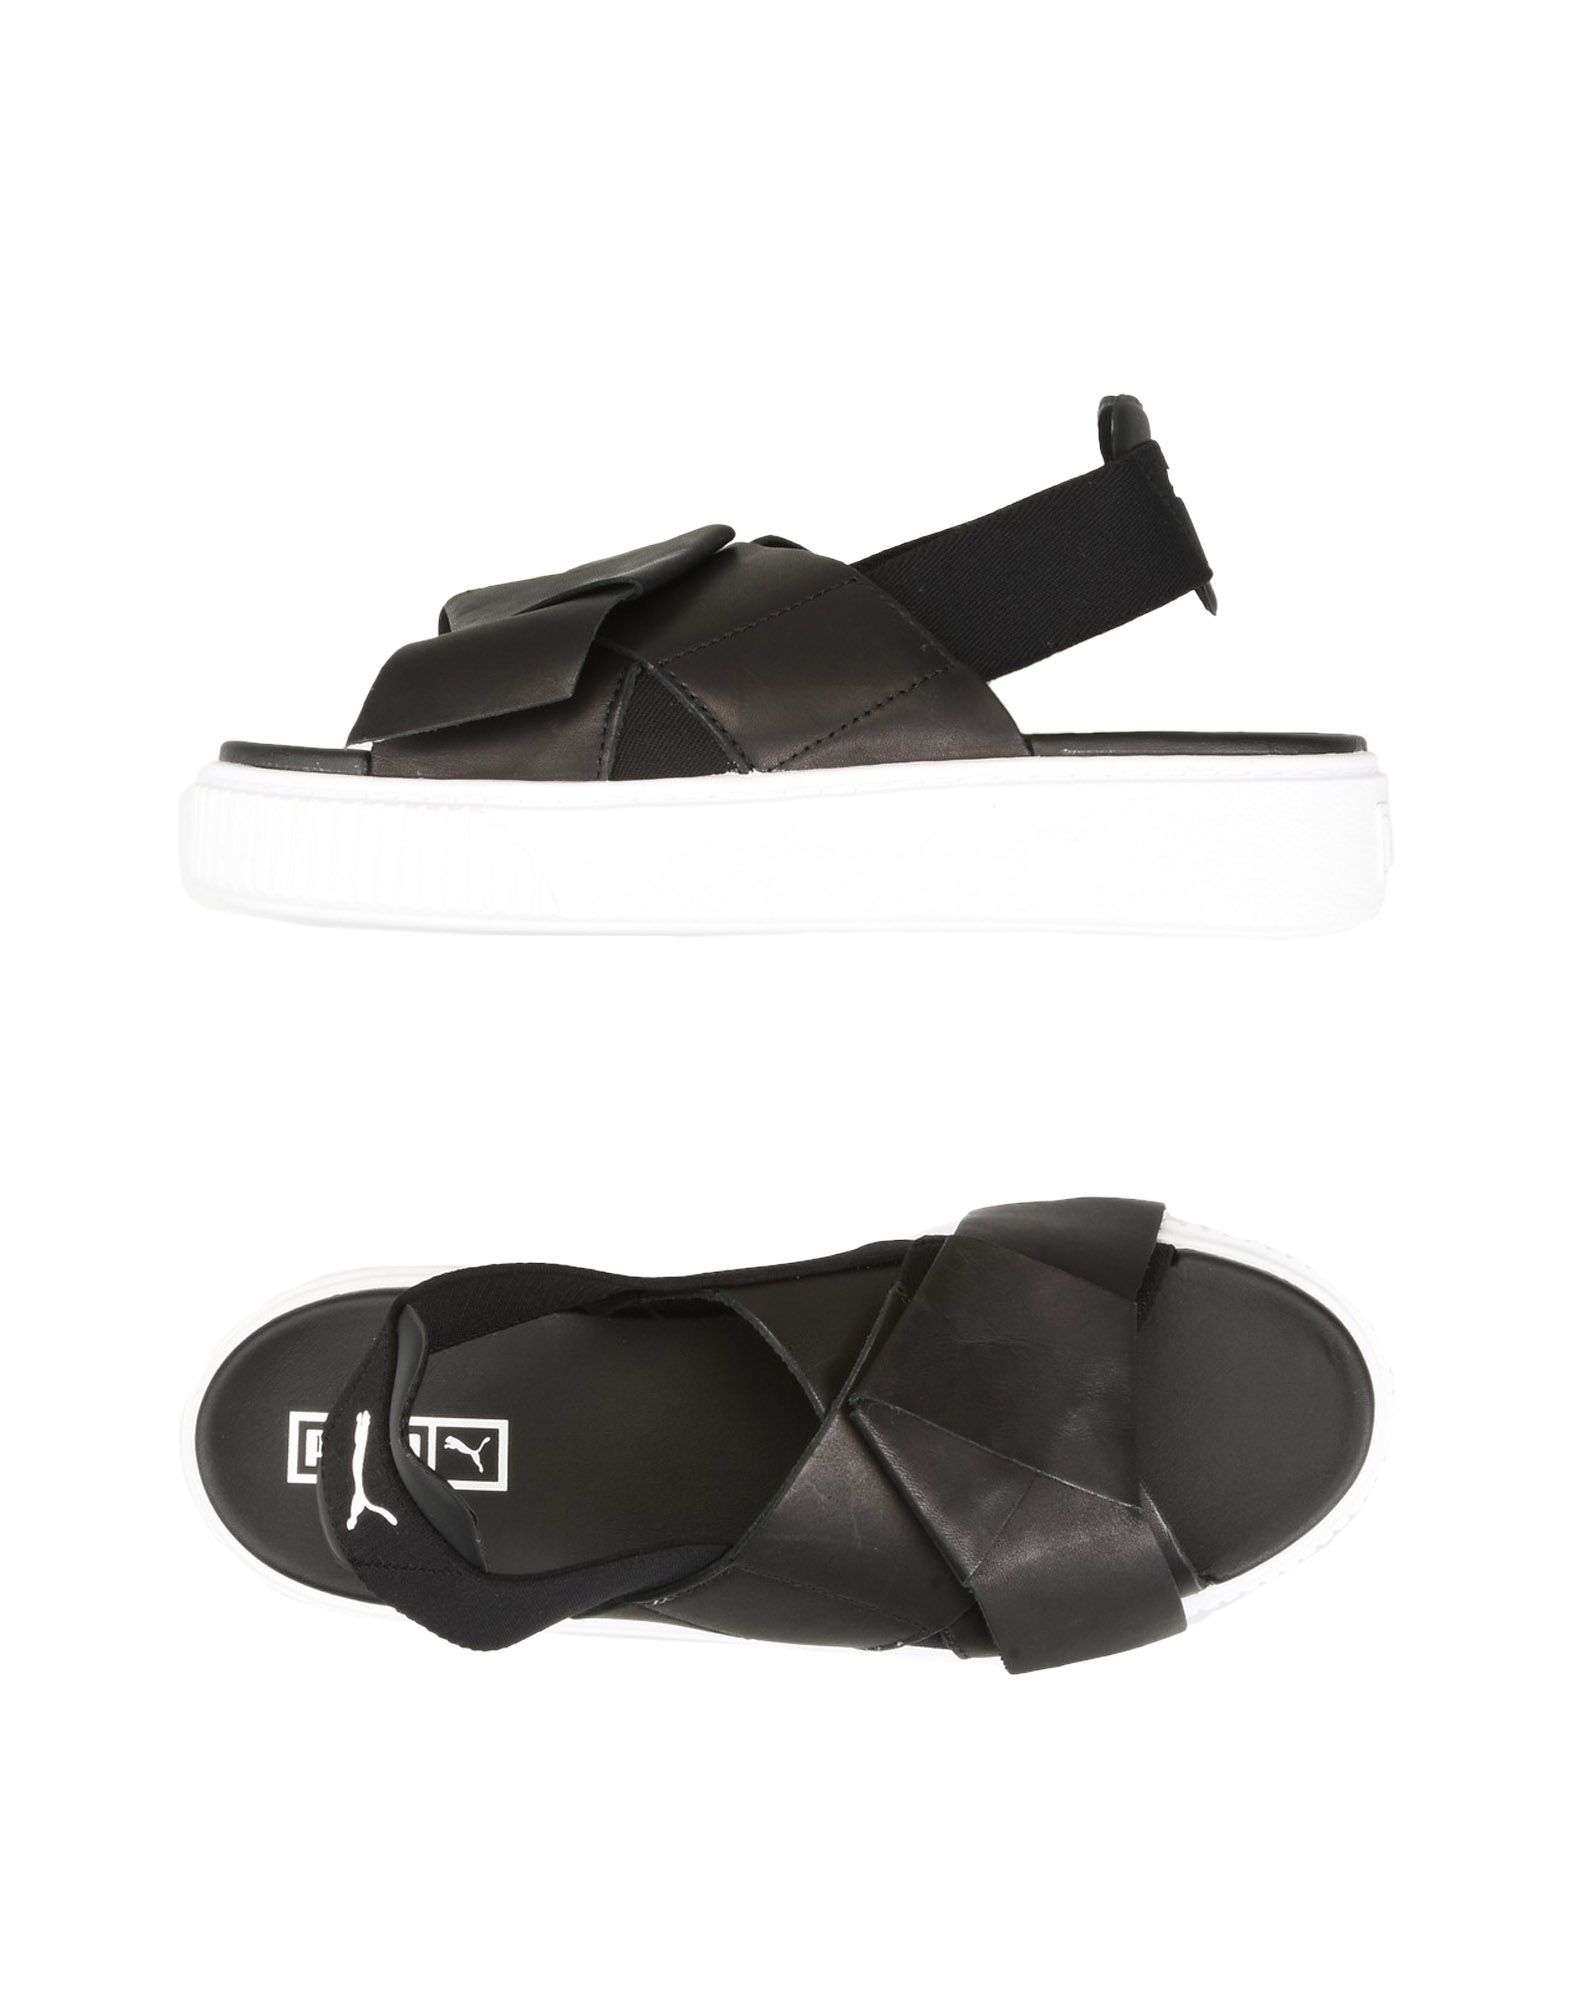 buy puma sandals online